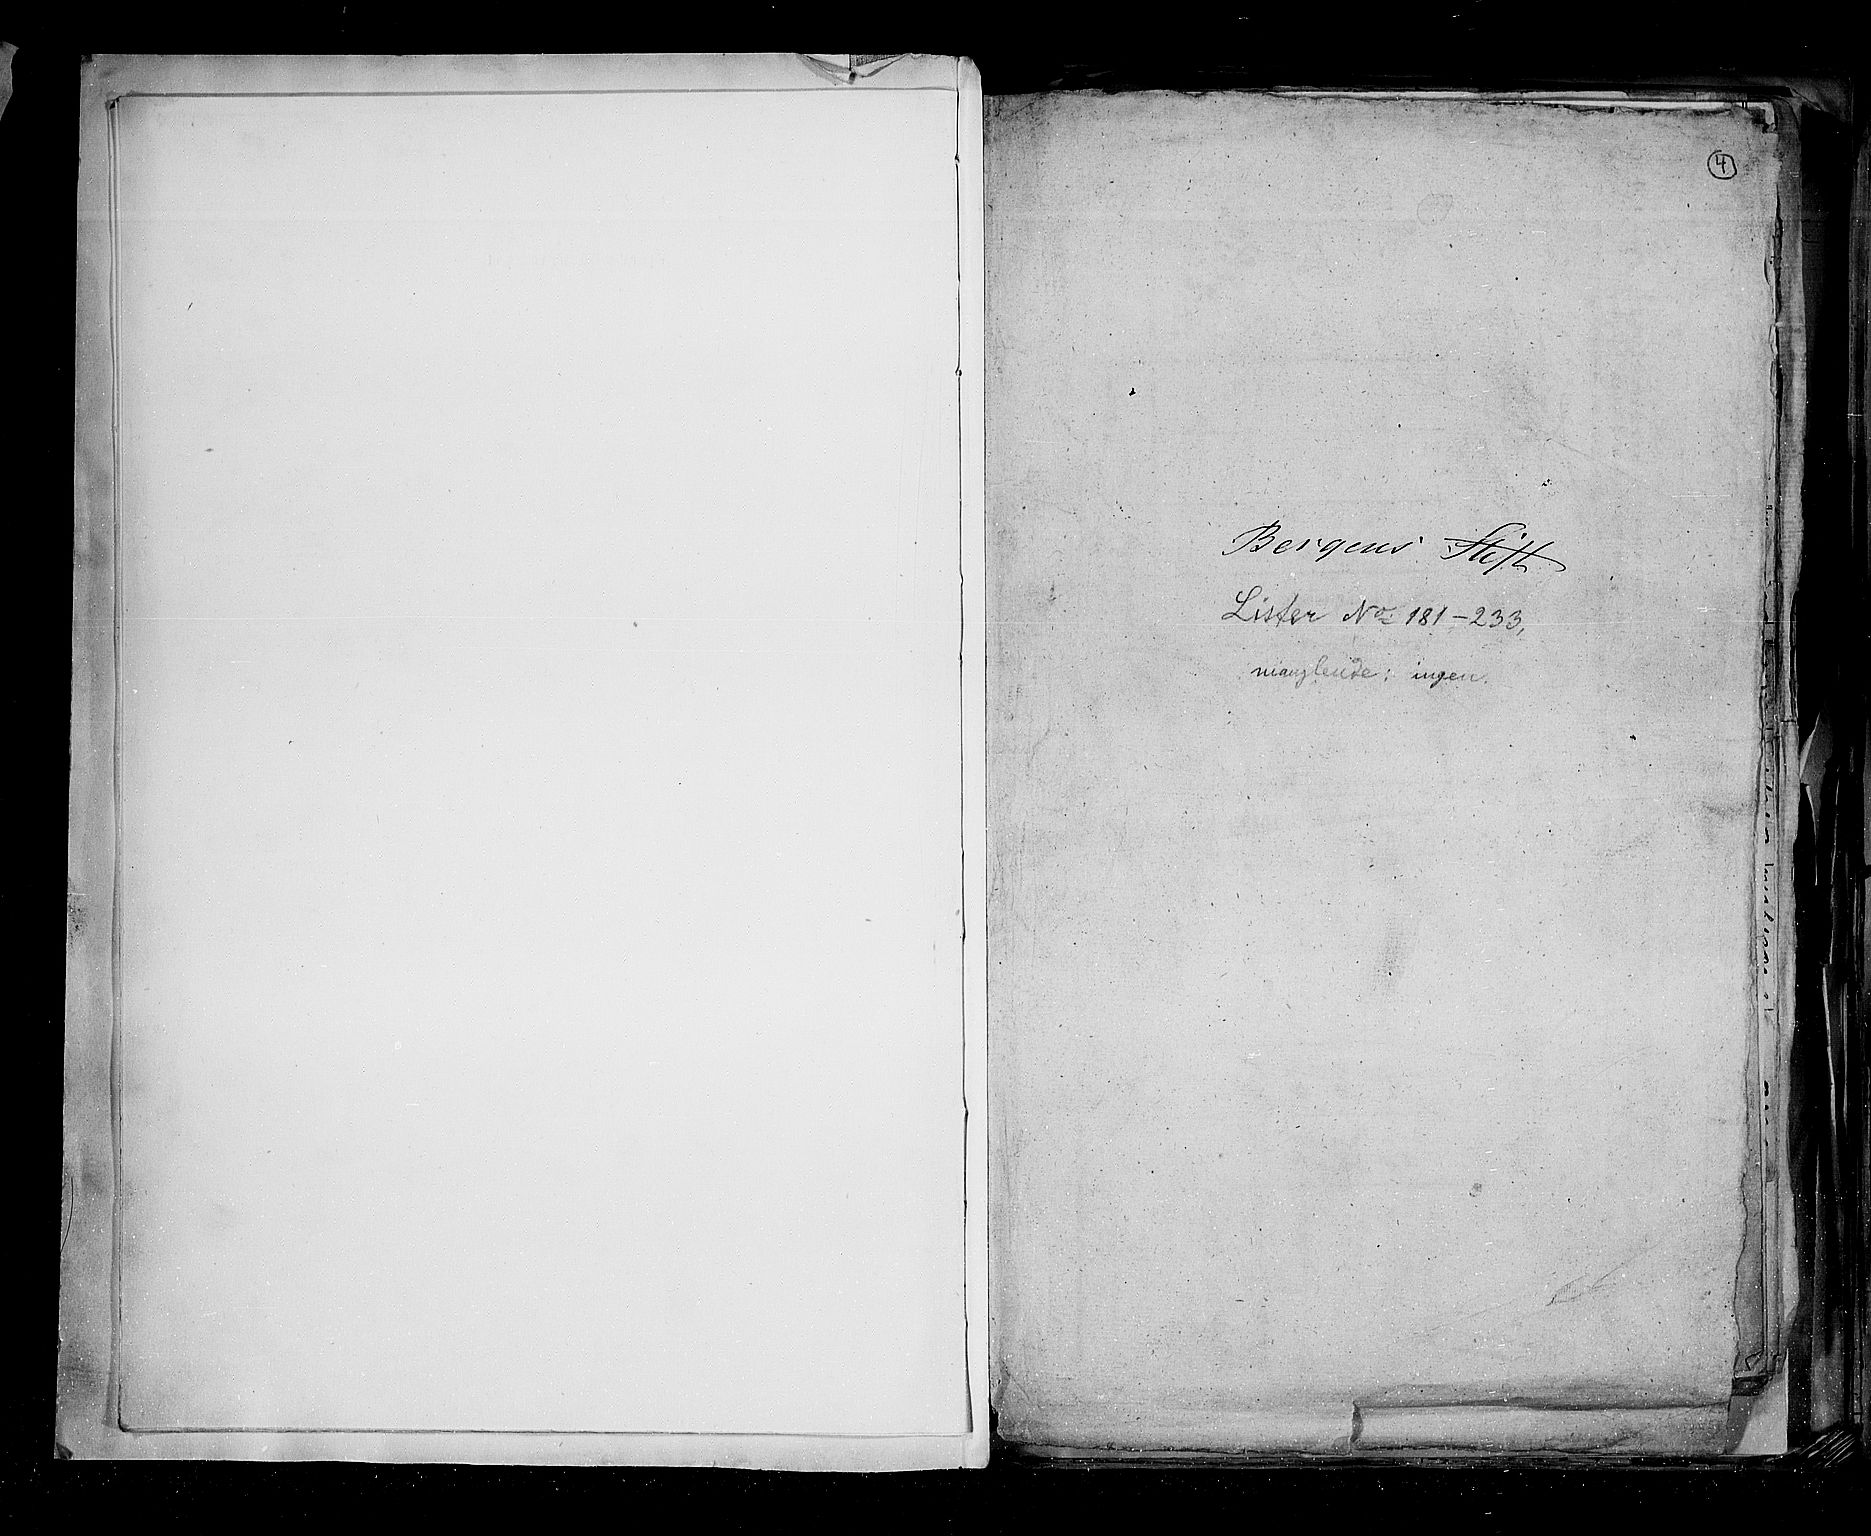 RA, Census 1815, vol. 2: Bergen stift and Trondheim stift, 1815, p. 5